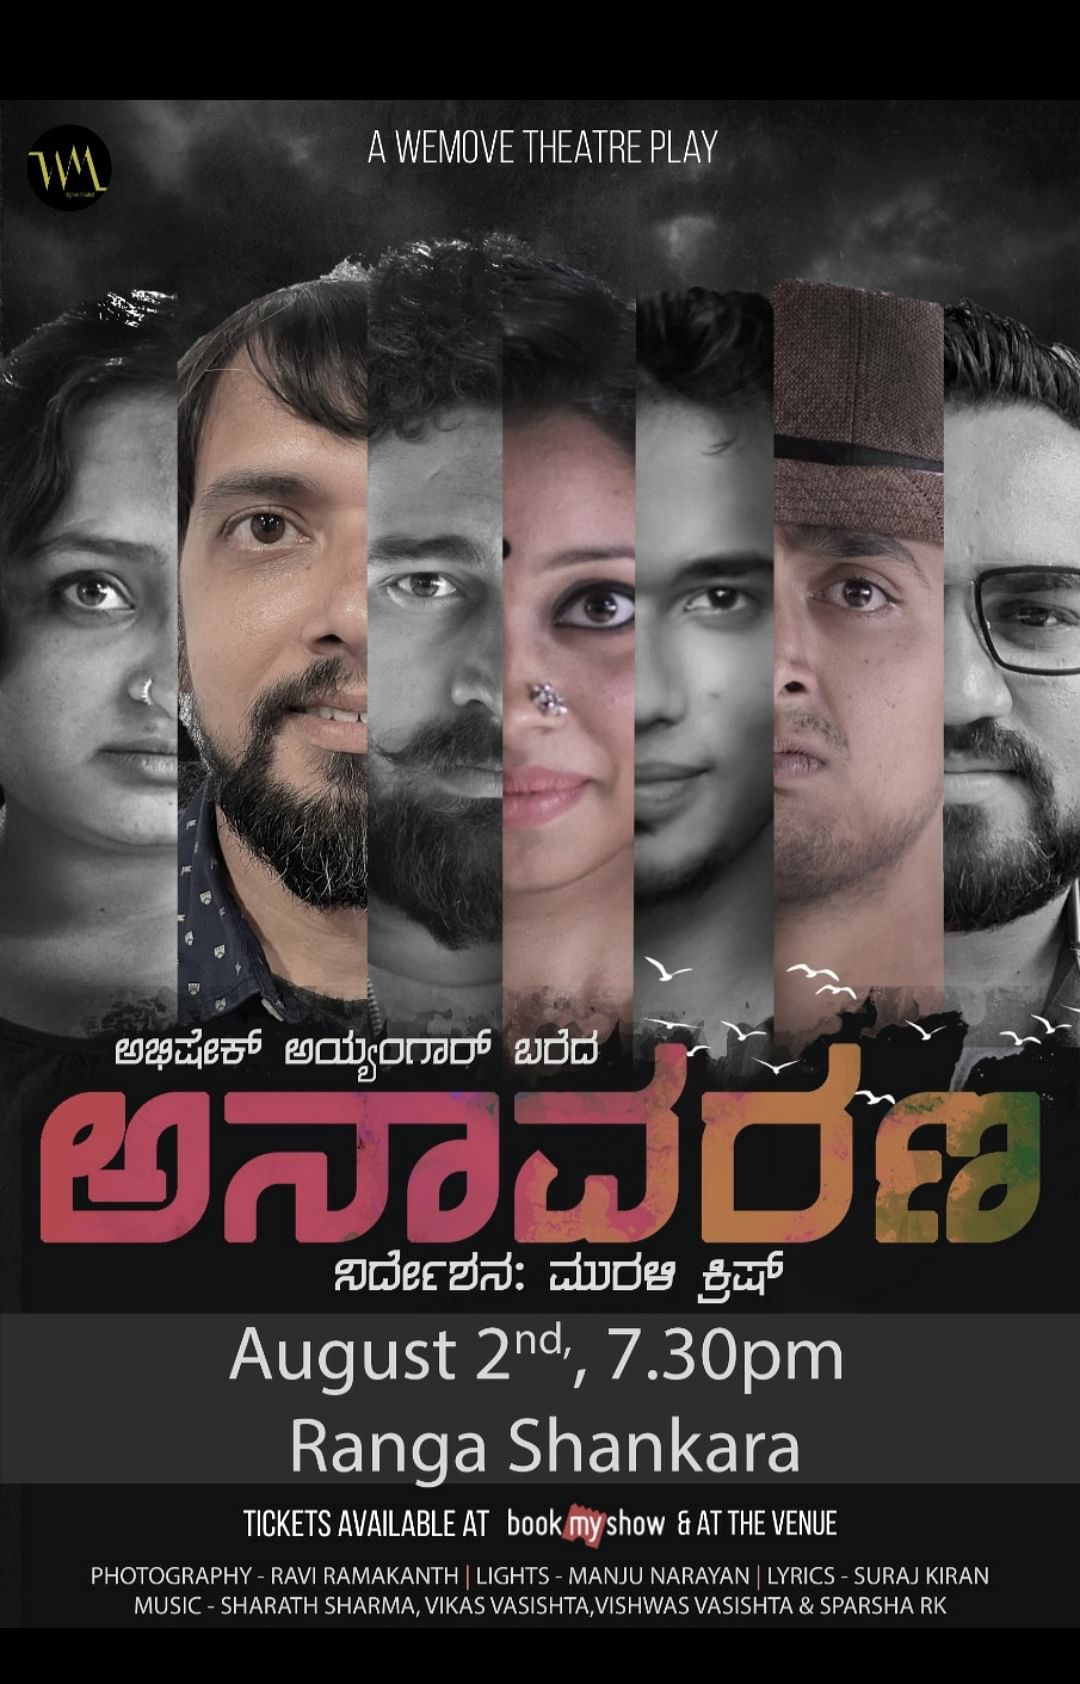 Watch 'Anavarana' at Ranga Shankara on Aug 2